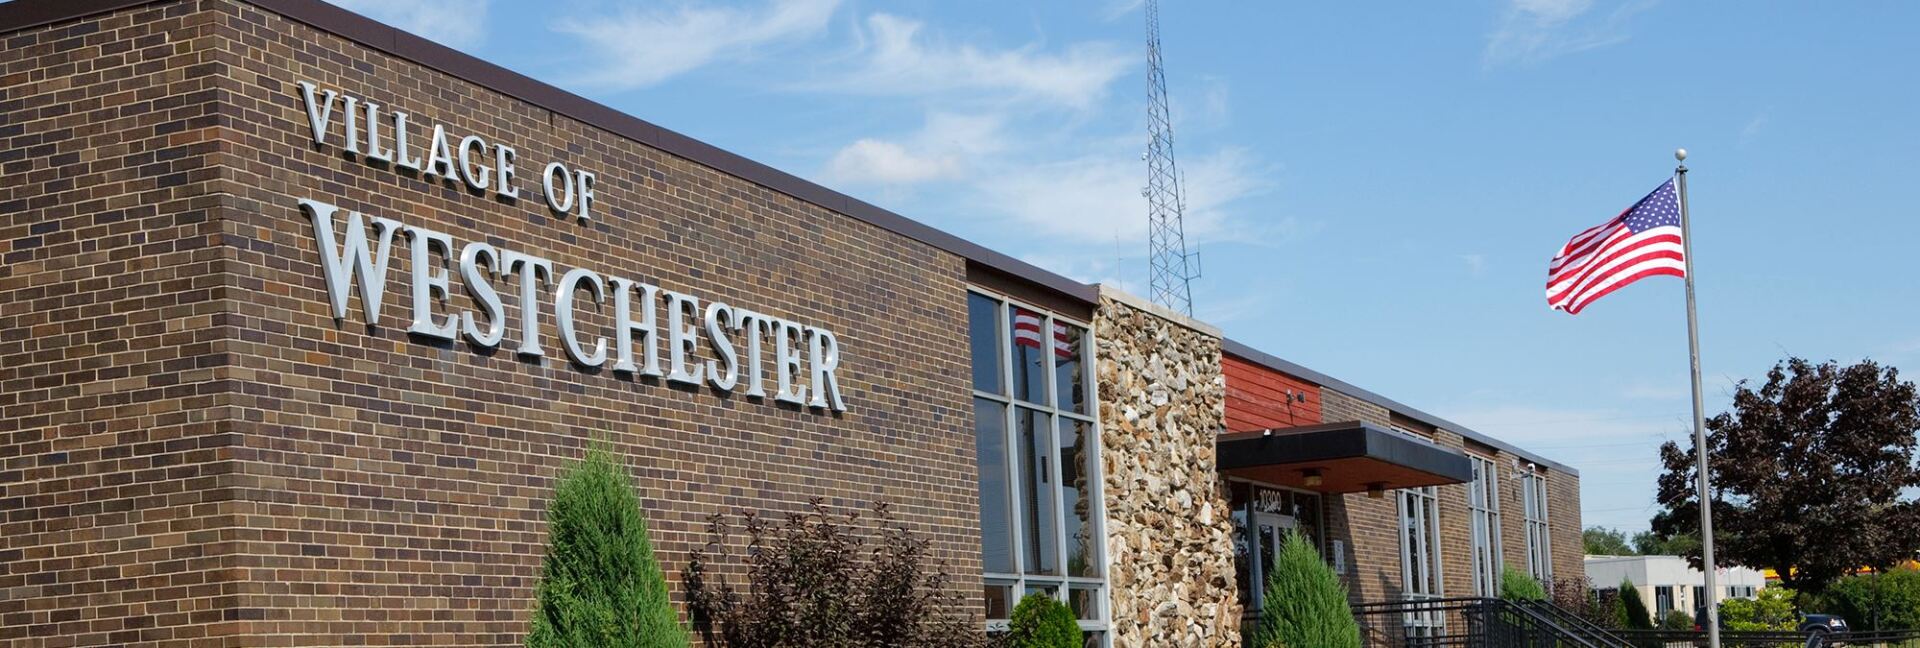 Westchester Attic Insulation Services